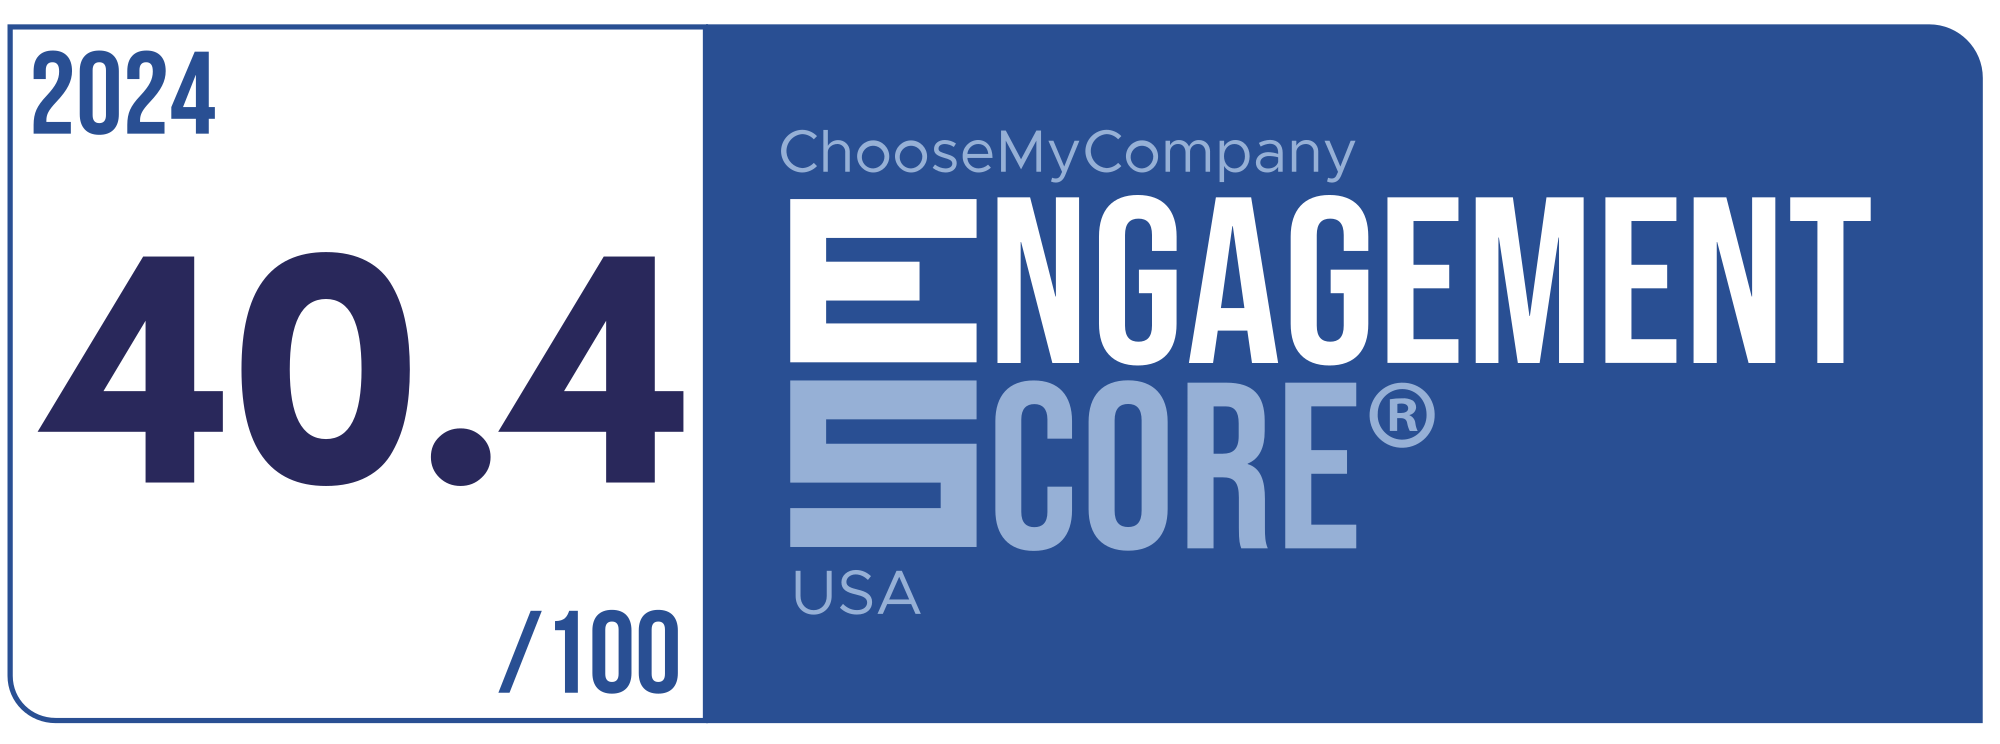 Label Engagement Score 2024 USA